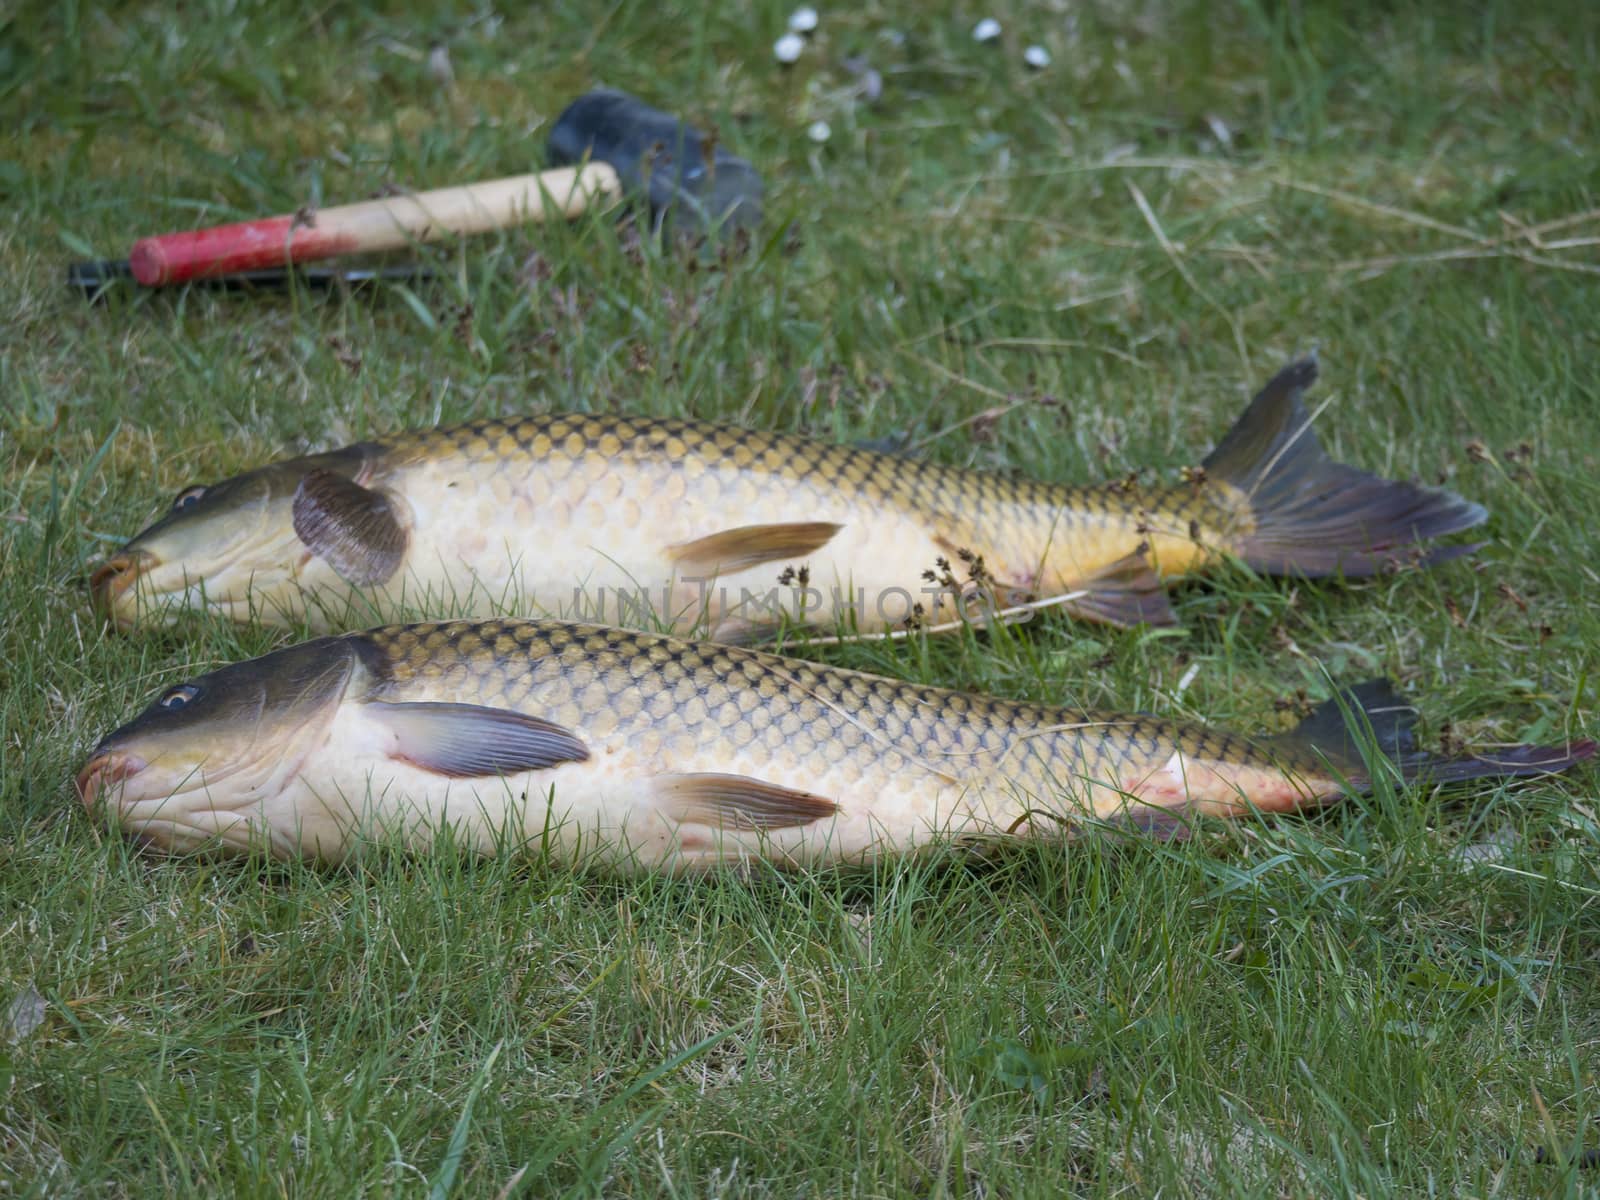 Two big close up fresh live wild common carp or European carp, Cyprinus carpio on the grass. Raw freshwater fish catch with club to kill them by Henkeova